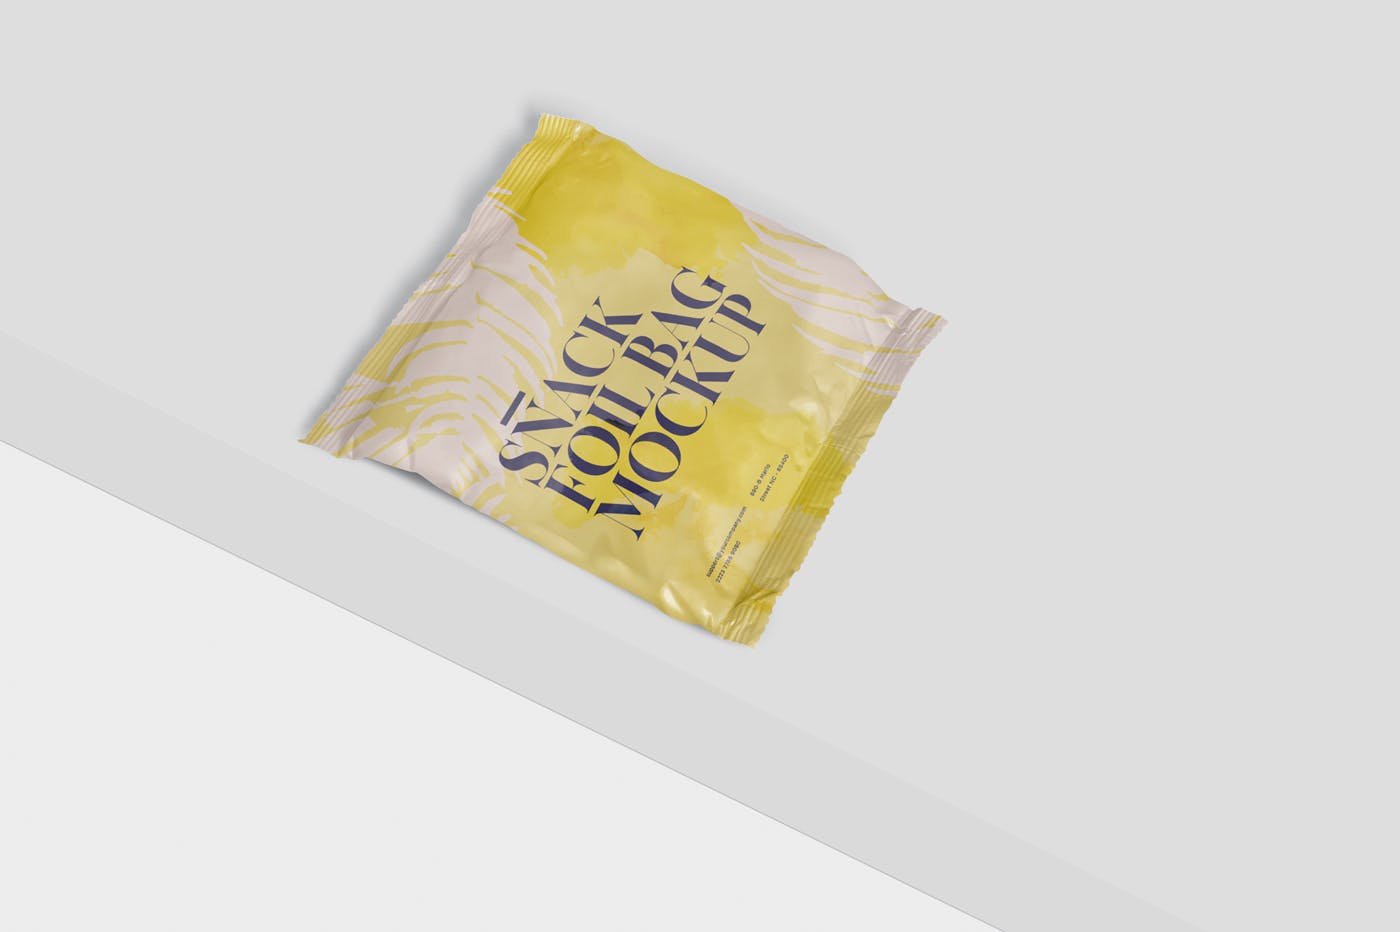 小吃零食铝箔包装袋设计图第一素材精选 Snack Foil Bag Mockup – Square Size – Small插图(2)